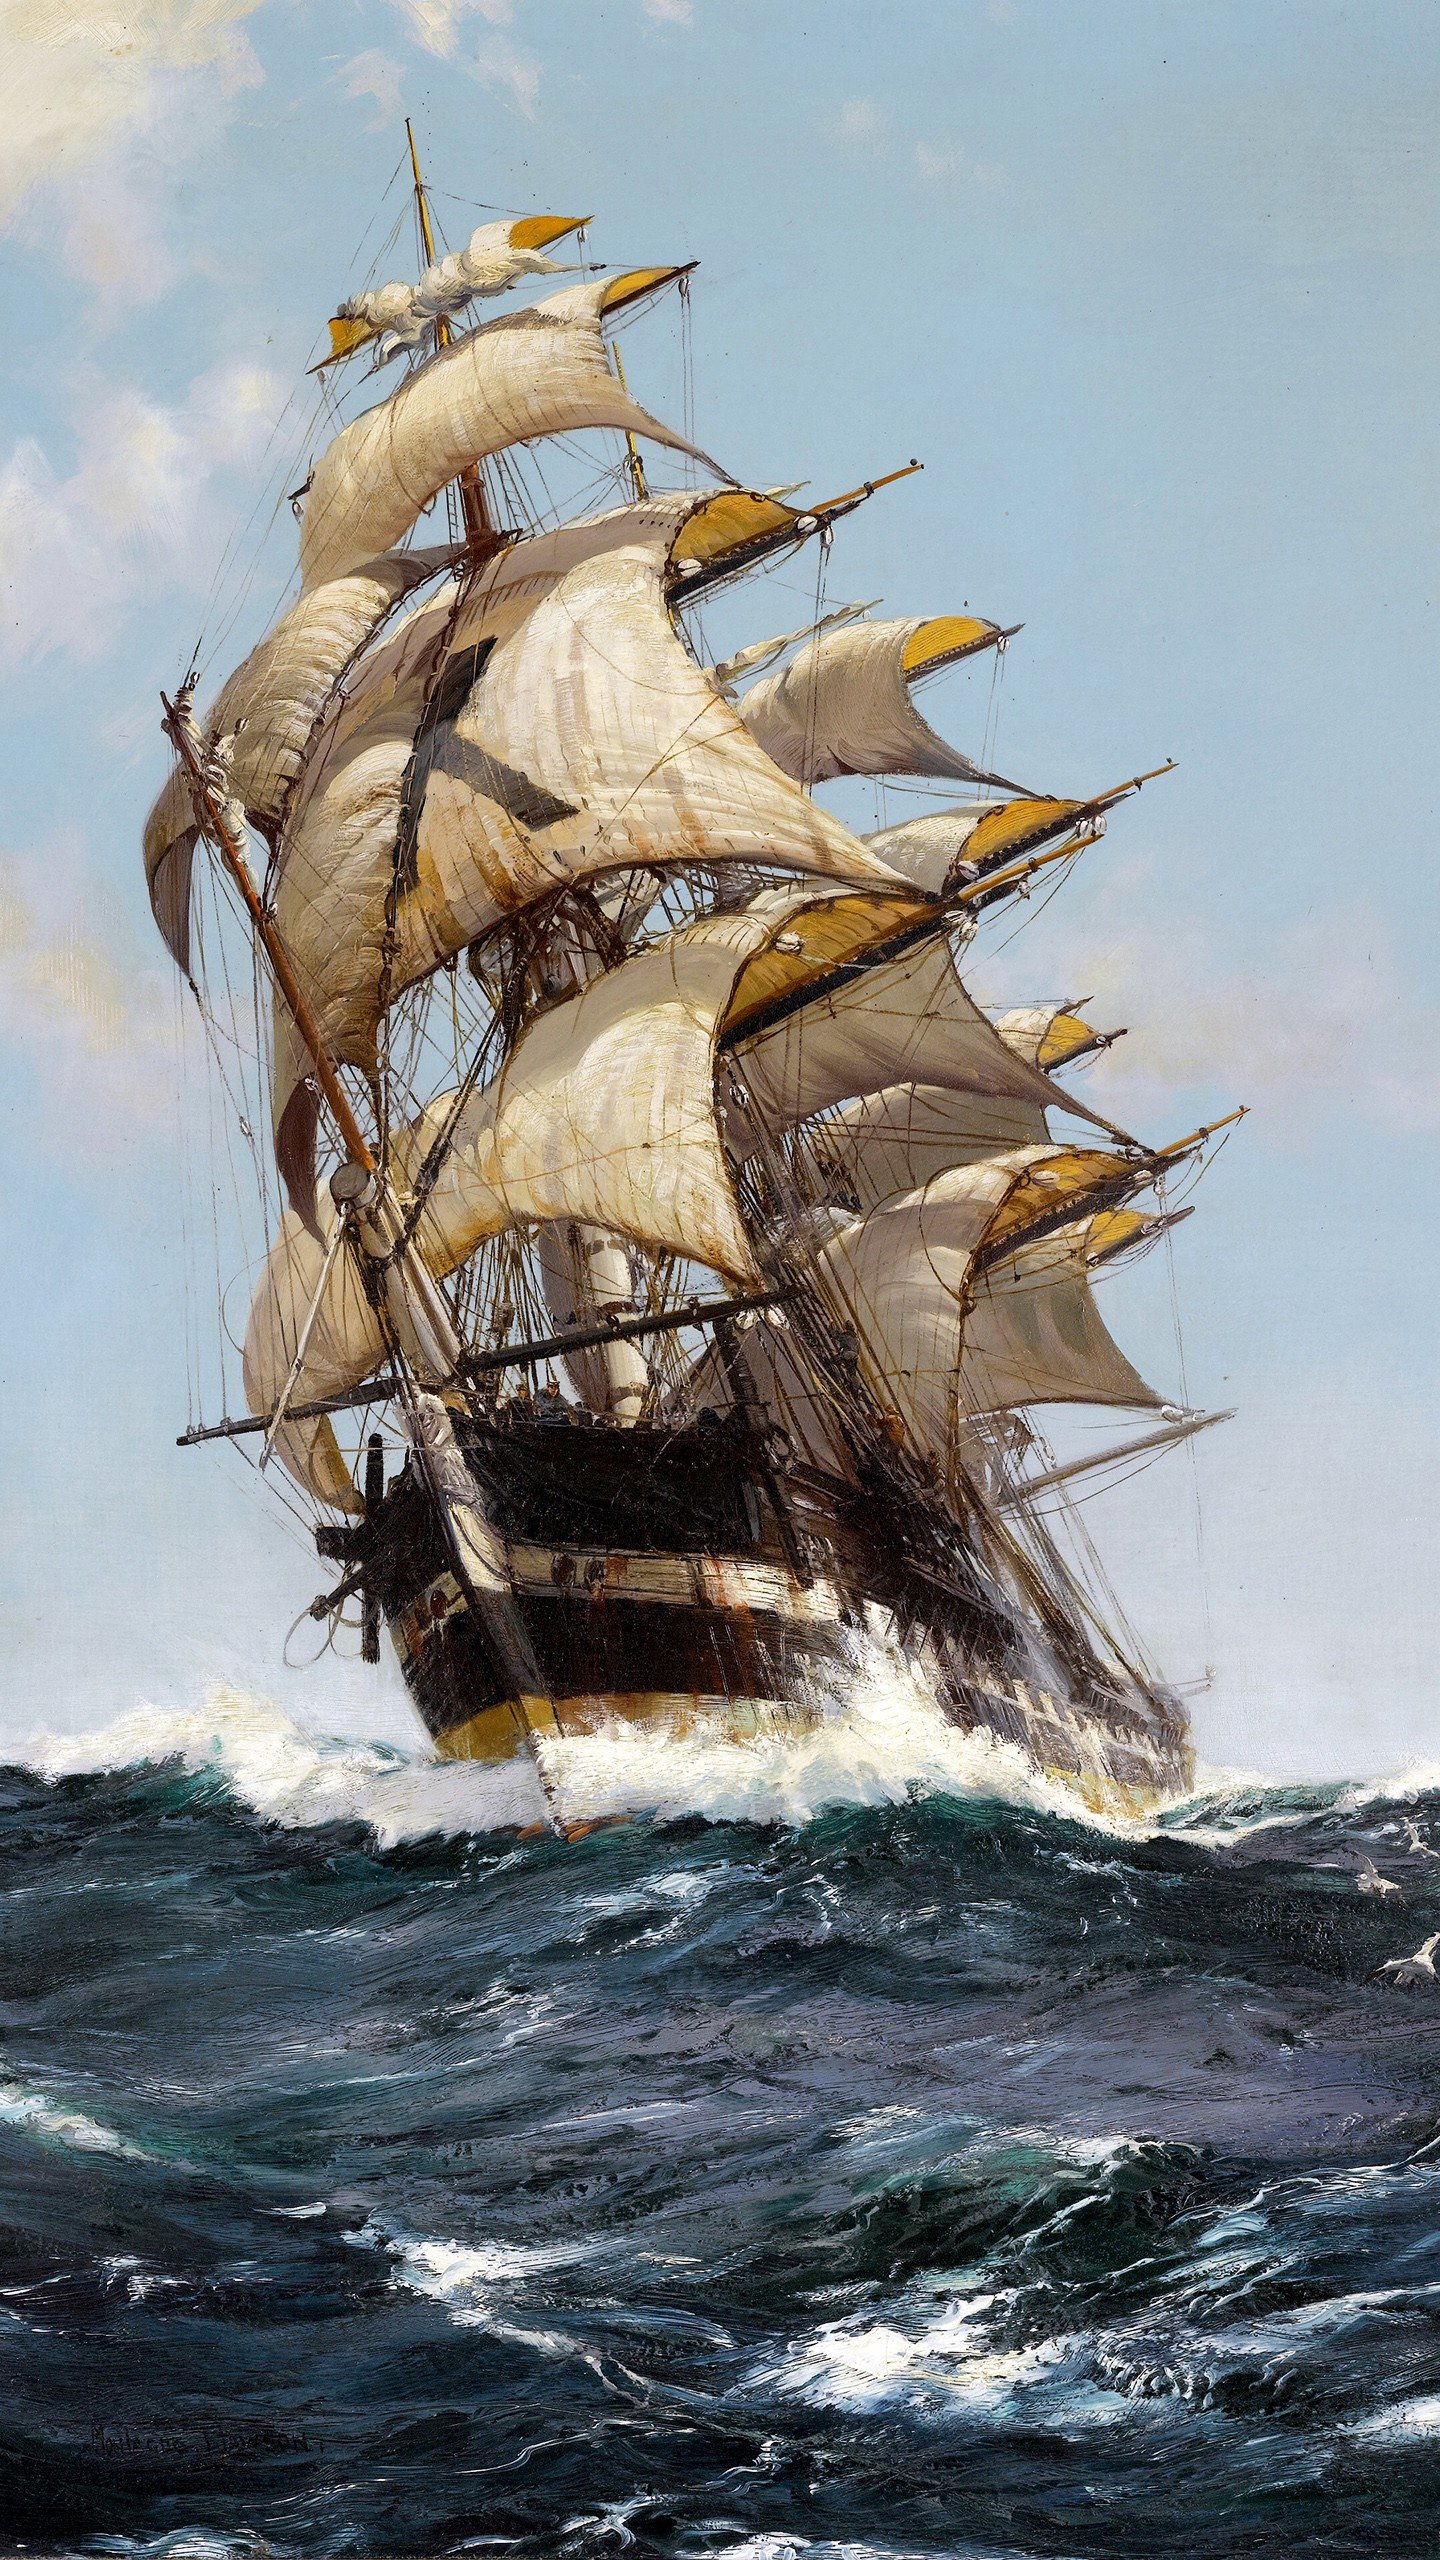 artwork, Classic, Art, Painting, Sailing, Ship, Portrait, Display, Clouds, Sea, Waves, Sailor, Montague, Dawson Wallpaper